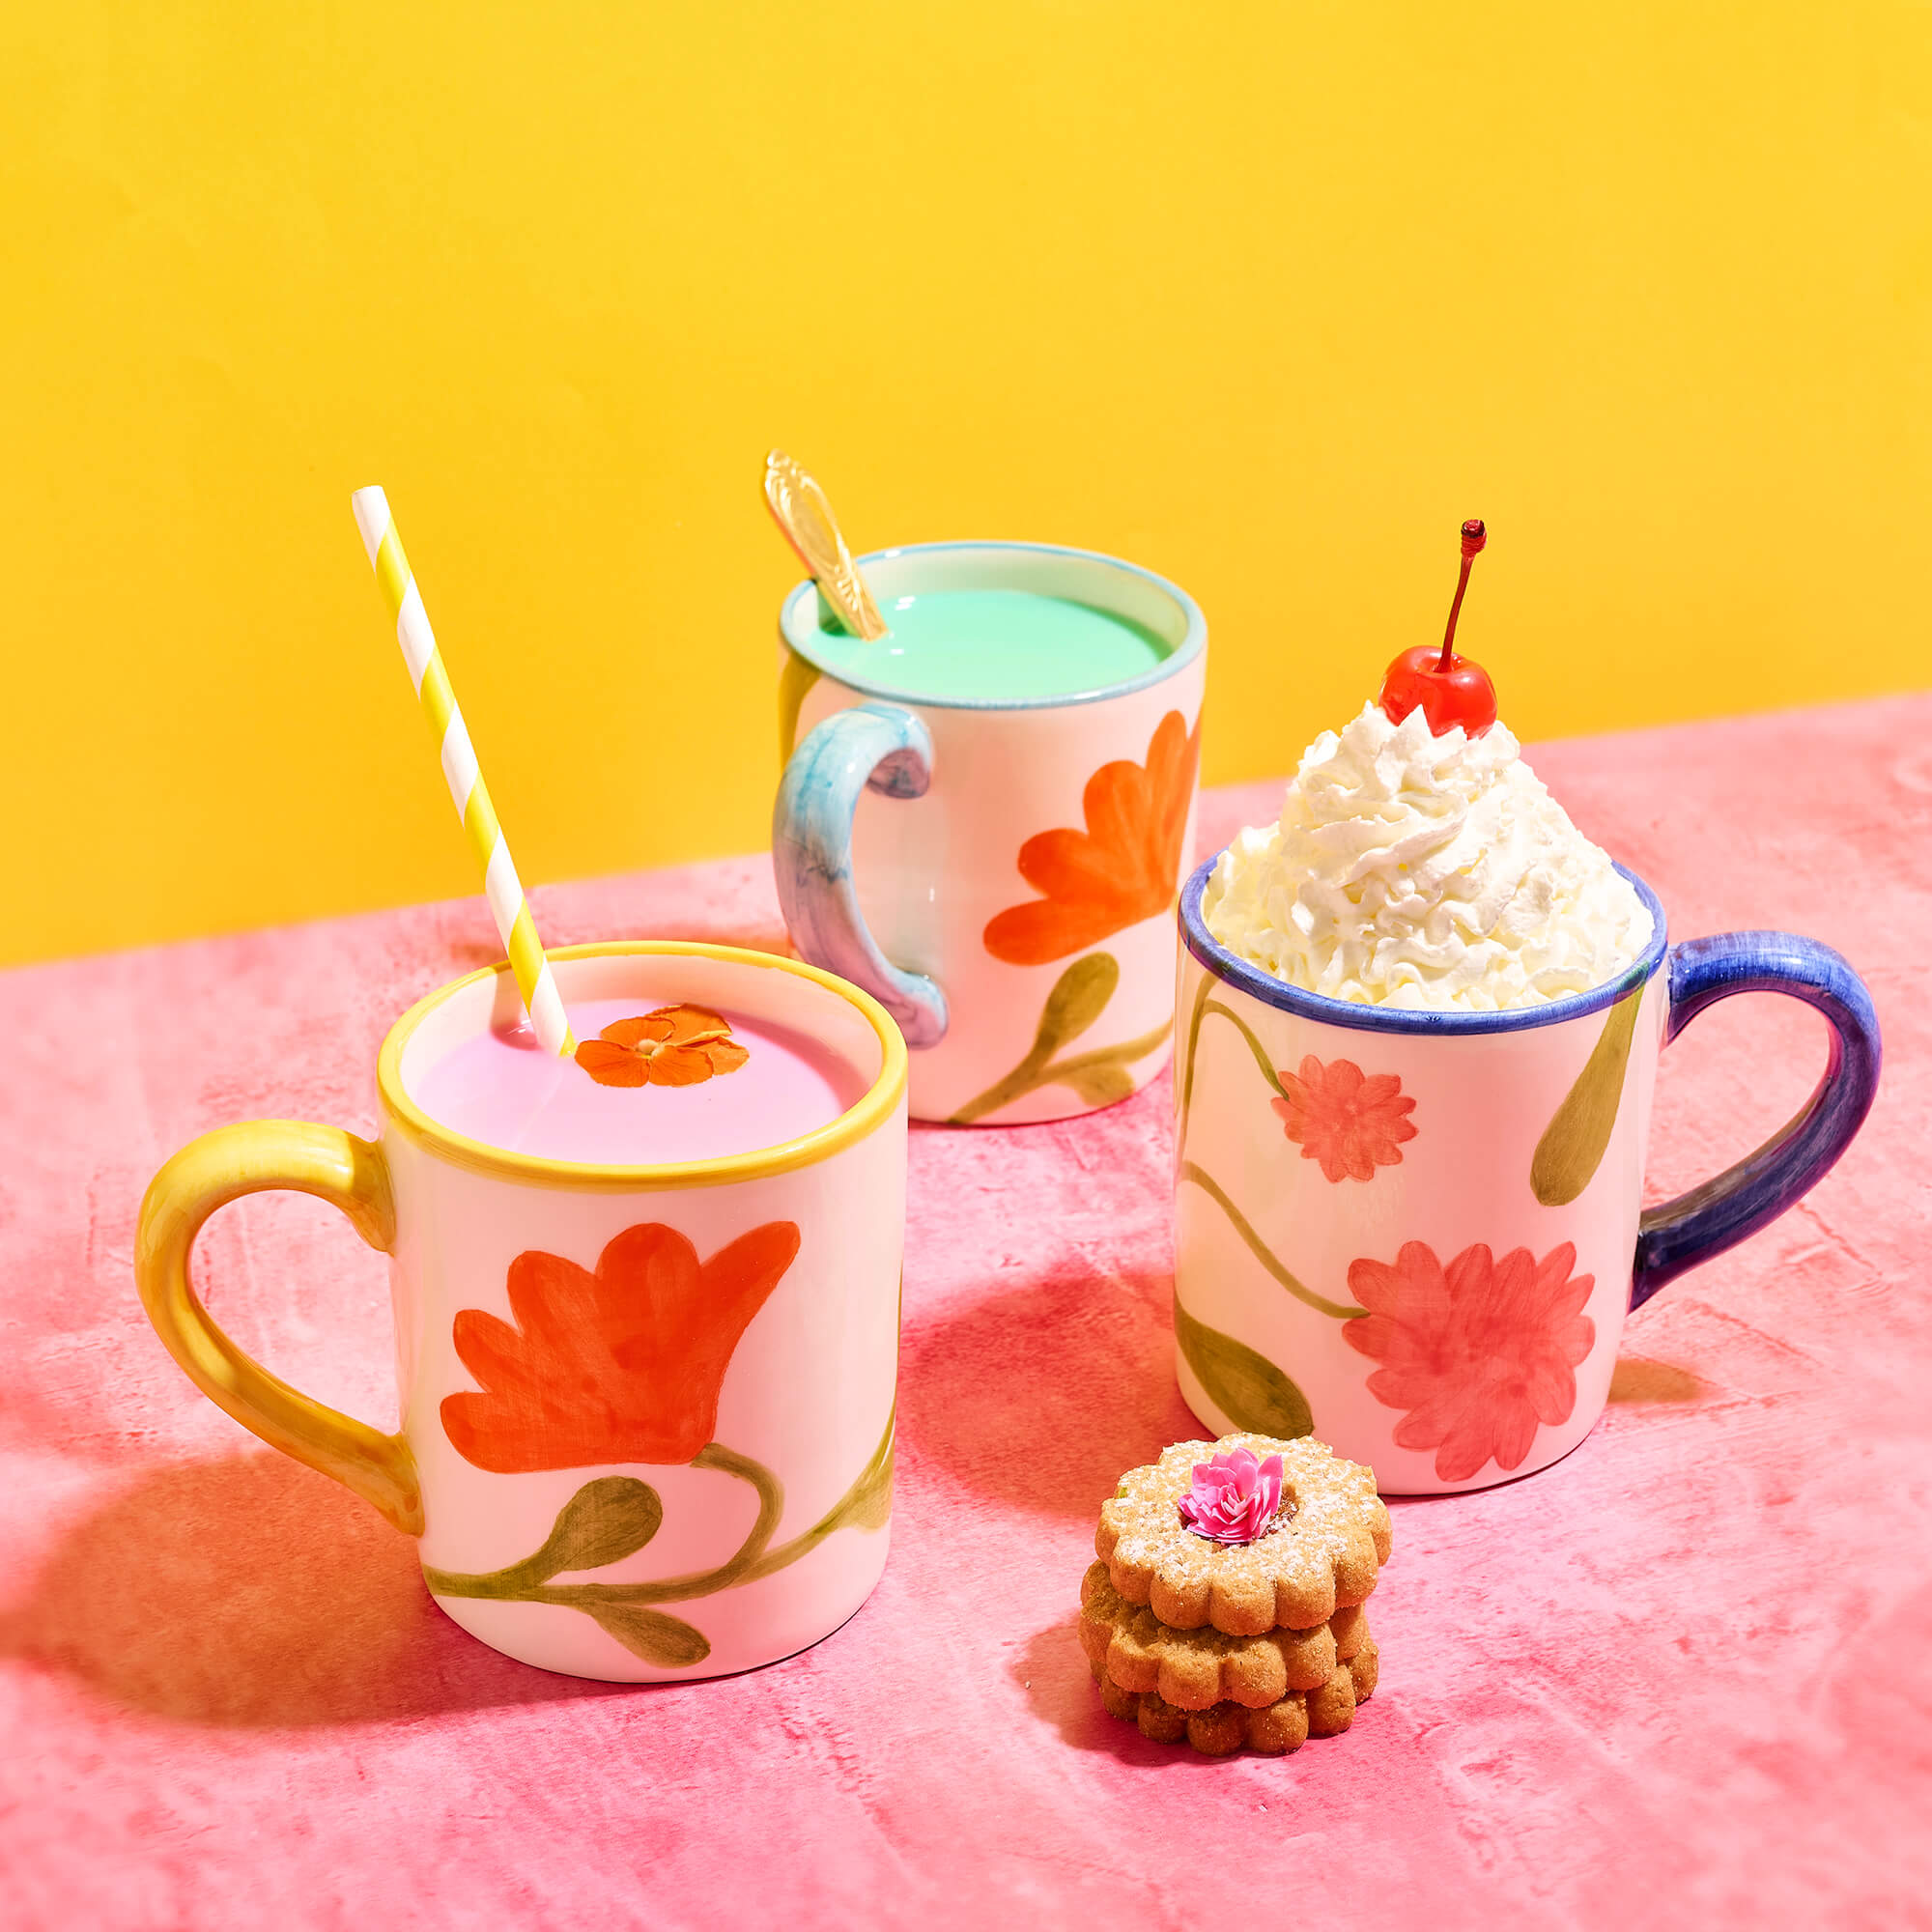 Our Perfect Cookie Mug Recipe